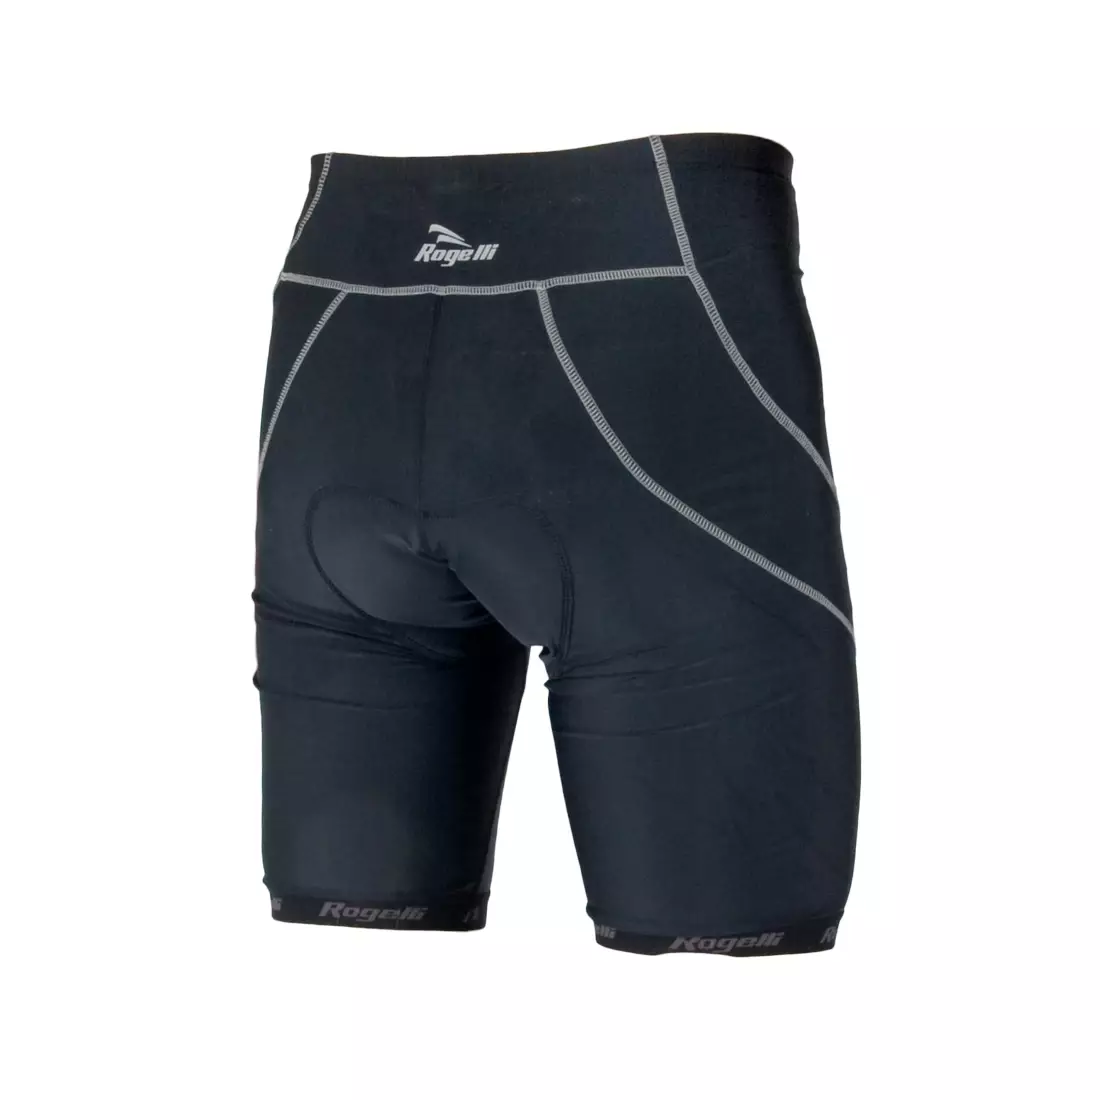 ROGELLI PONZONE - men's cycling shorts